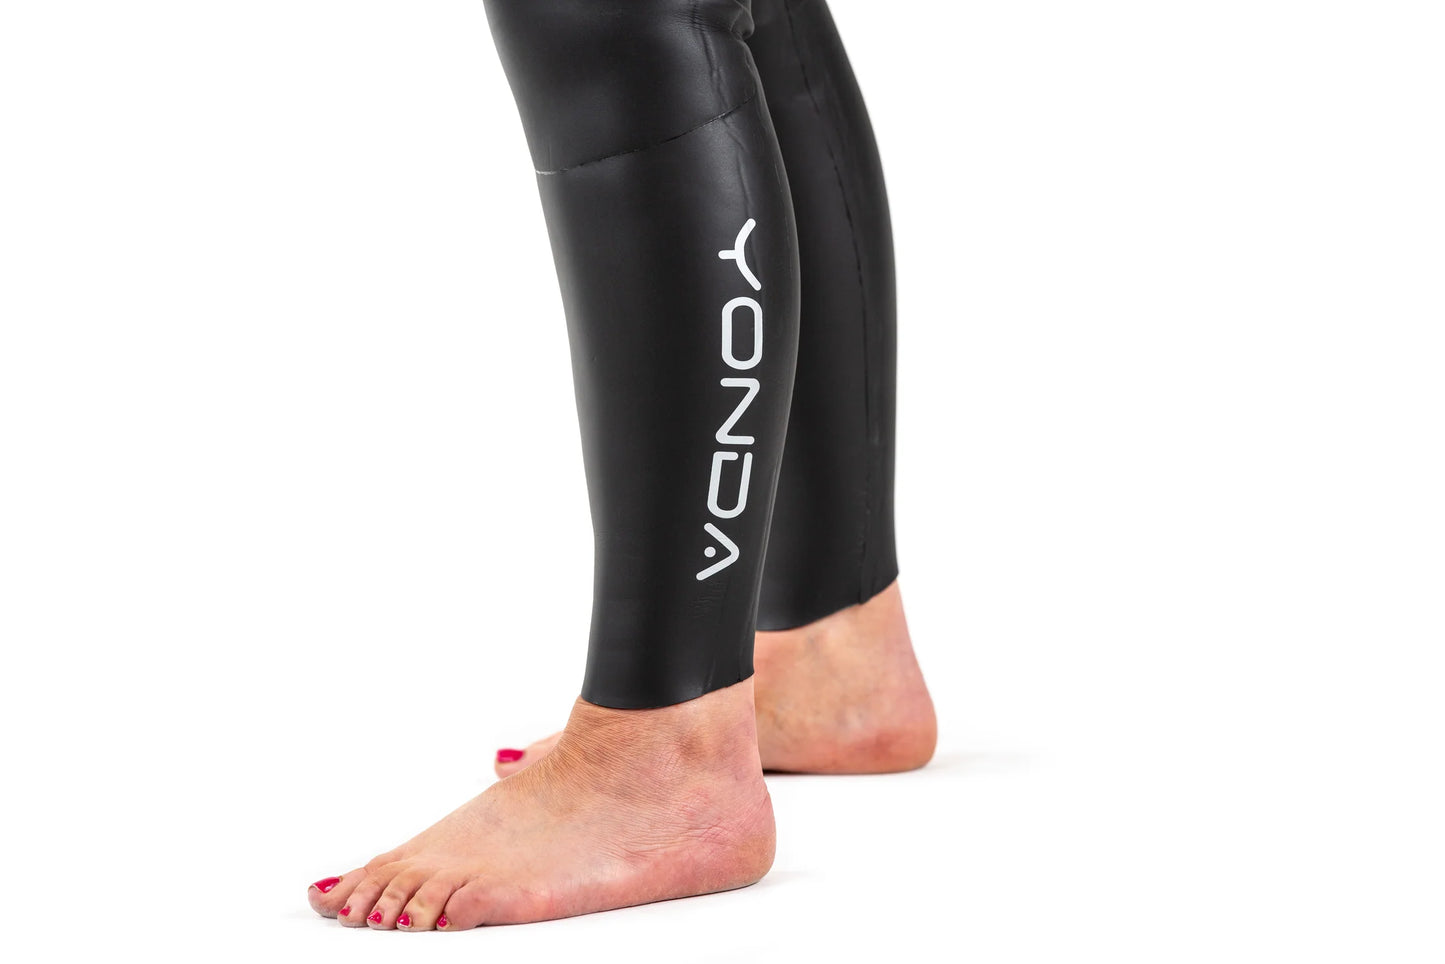 The Yonda Spook Open Water Swimming Wetsuit - Women's